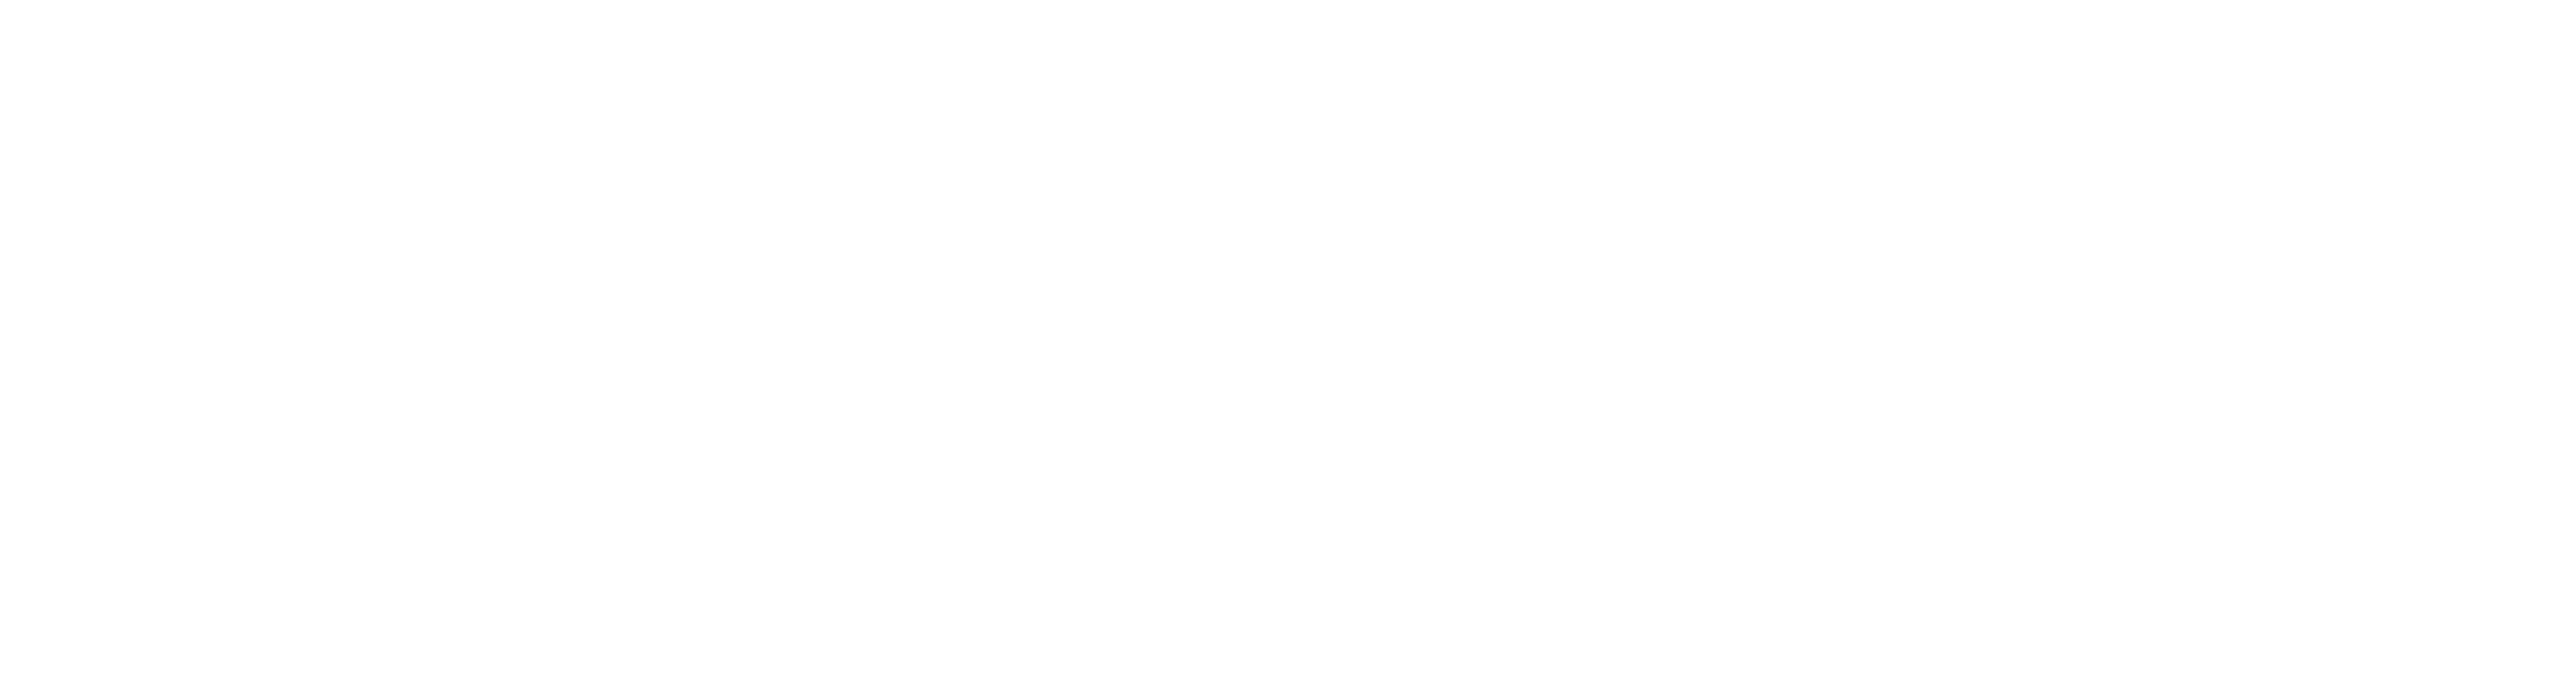 Watermark Resources Merch Store footer logo